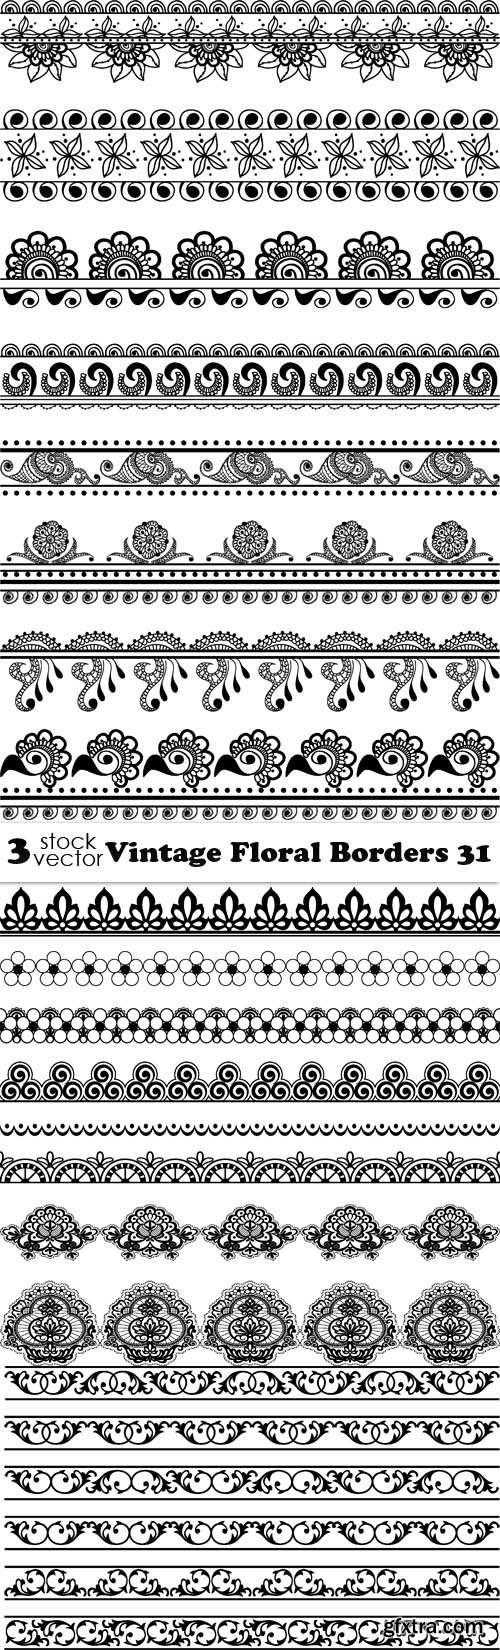 Vectors - Vintage Floral Borders 31